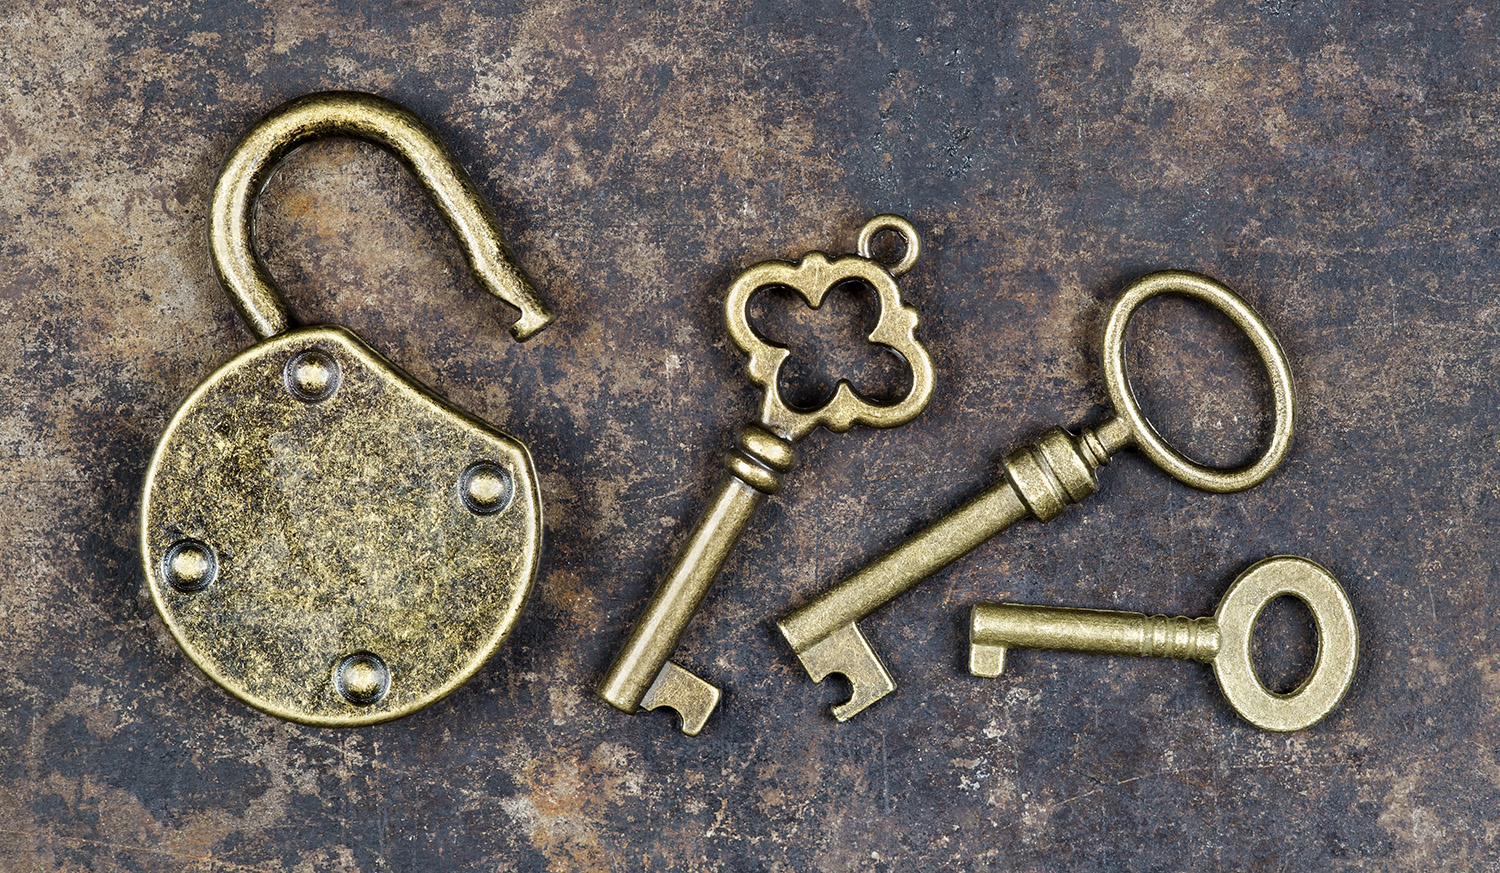 antique-padlock-and-keys-escape-room-game-concept-2022-03-18-13-38-54-utc-1